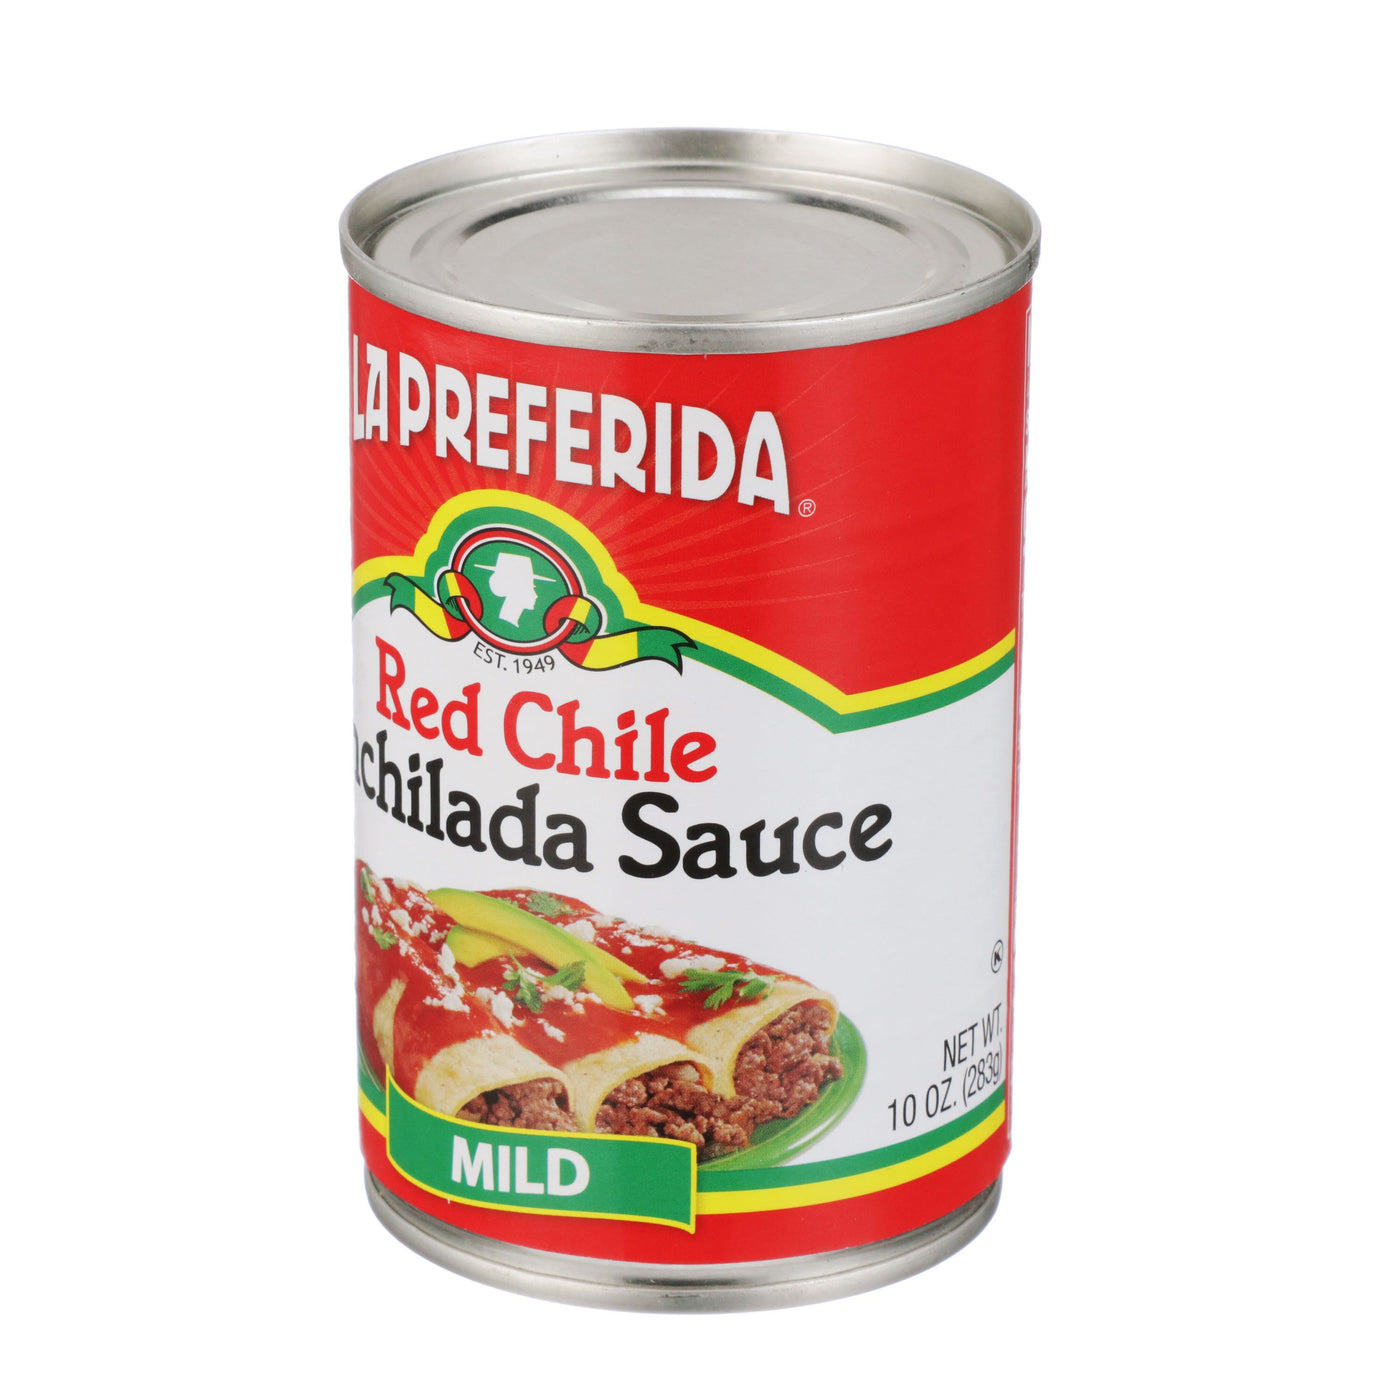 Red Enchilada Sauce, Mild